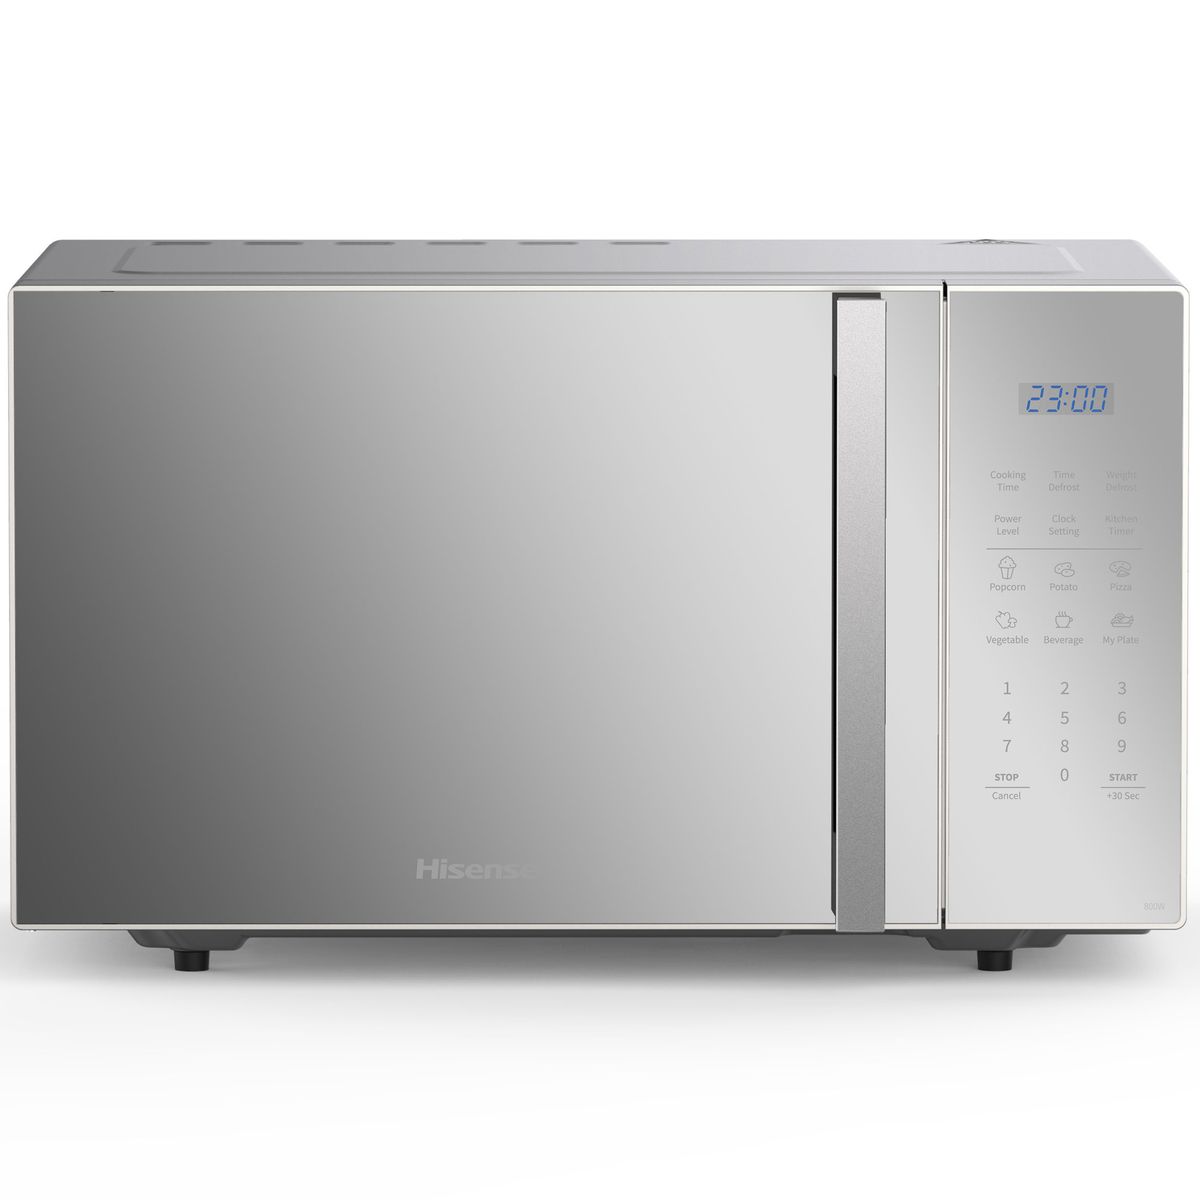 Hisense 26L Electronic Microwave Oven - Mirror